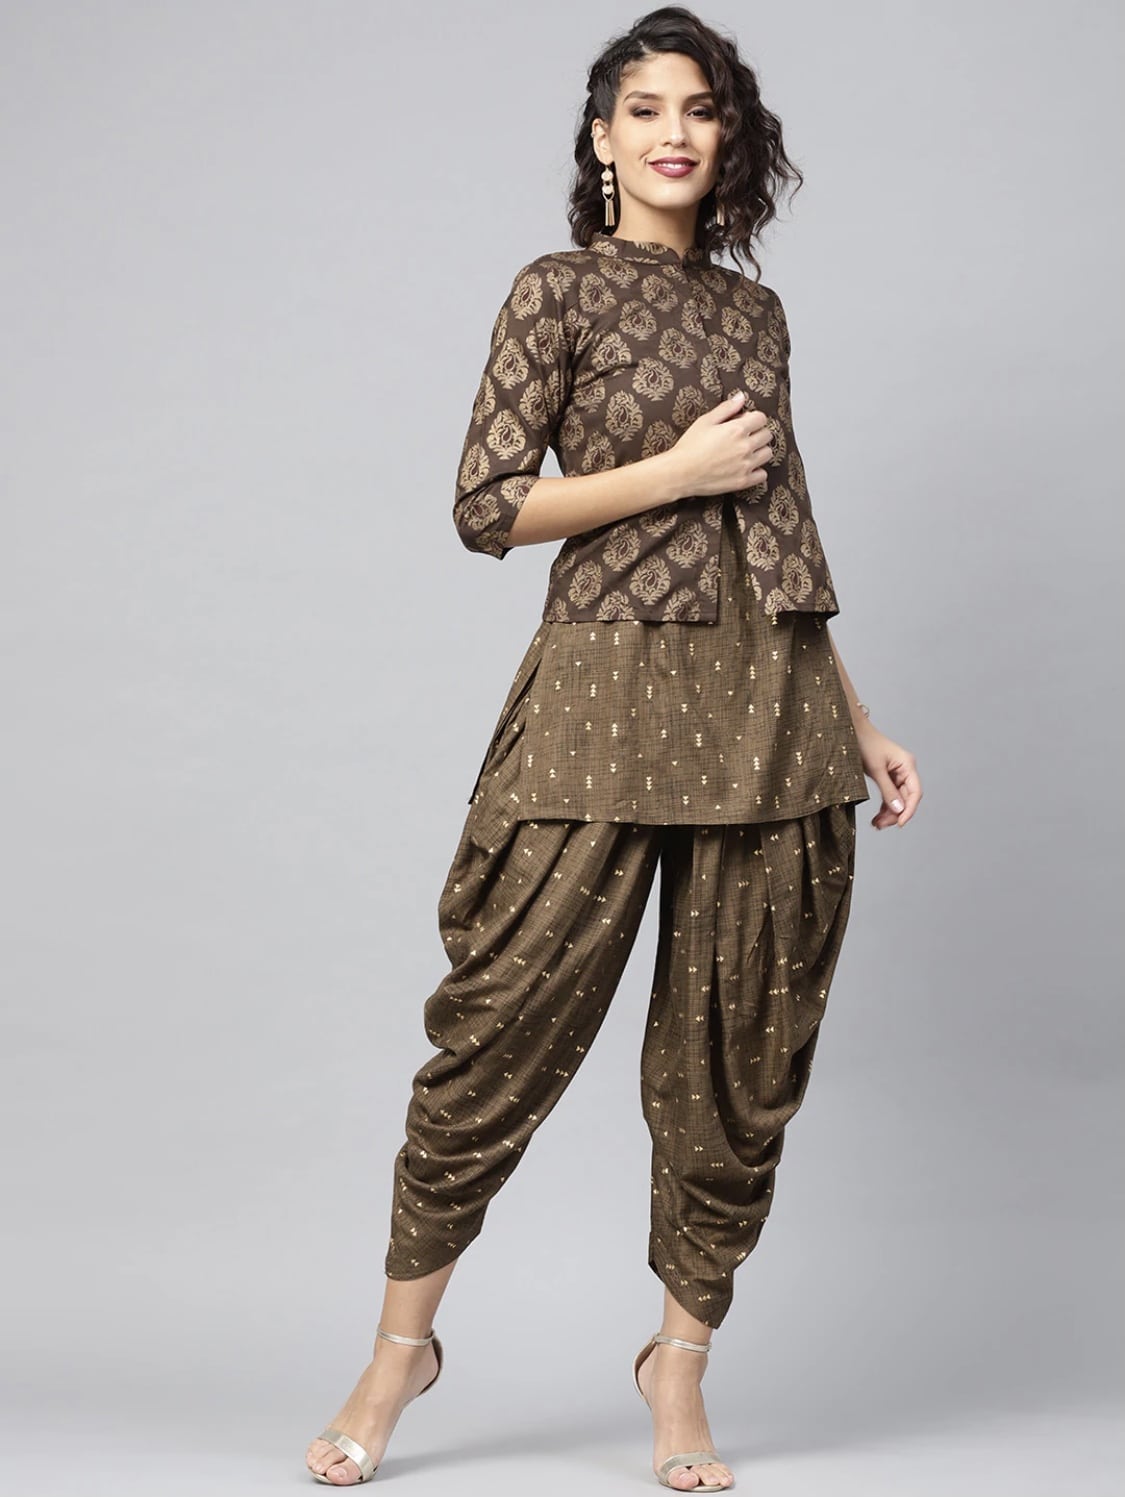 Salwar suits, Dhoti pants, Salwars, Fusion wear, Indo-western